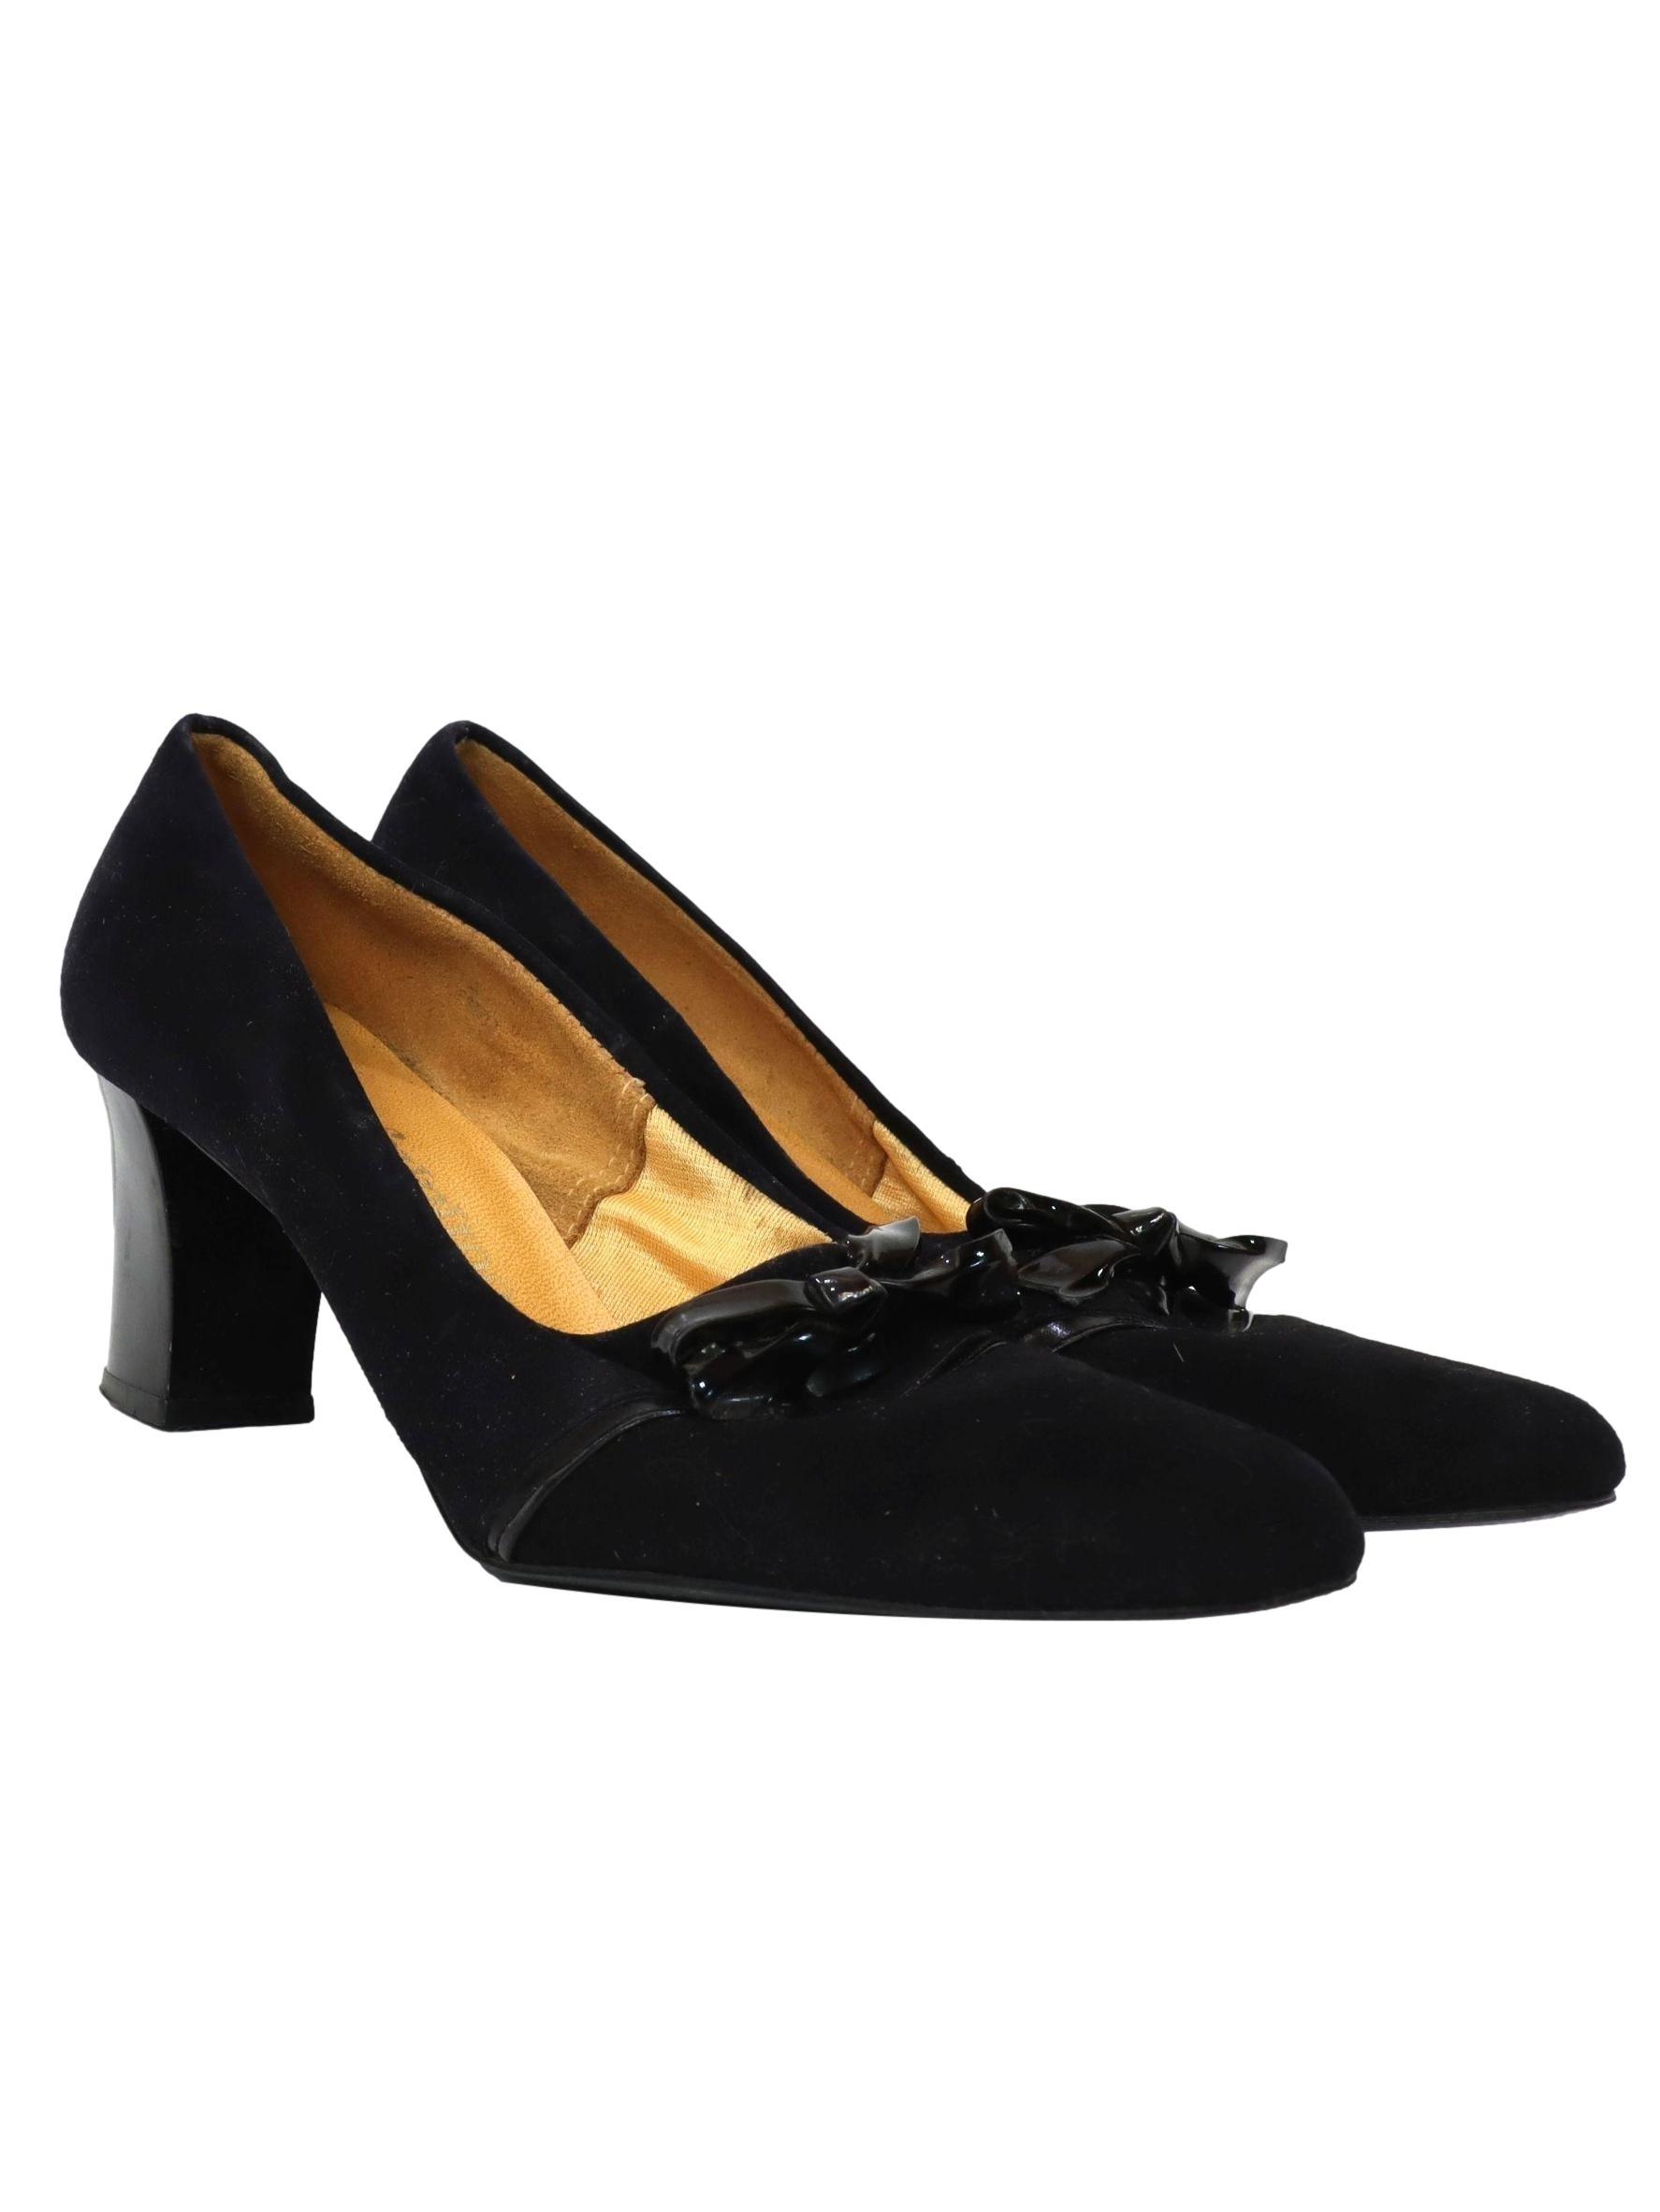 Image Footwear - Elegant Lady Fashion Sandal with 2.5 Inch Heel - TF-1786-  BLACK Colour For more details: IMAGE FOOTWEAR Tel: +6013-2406998 Whatsapp:  https://wa.me/60132406998 https://imagefootwear.com.my | Facebook